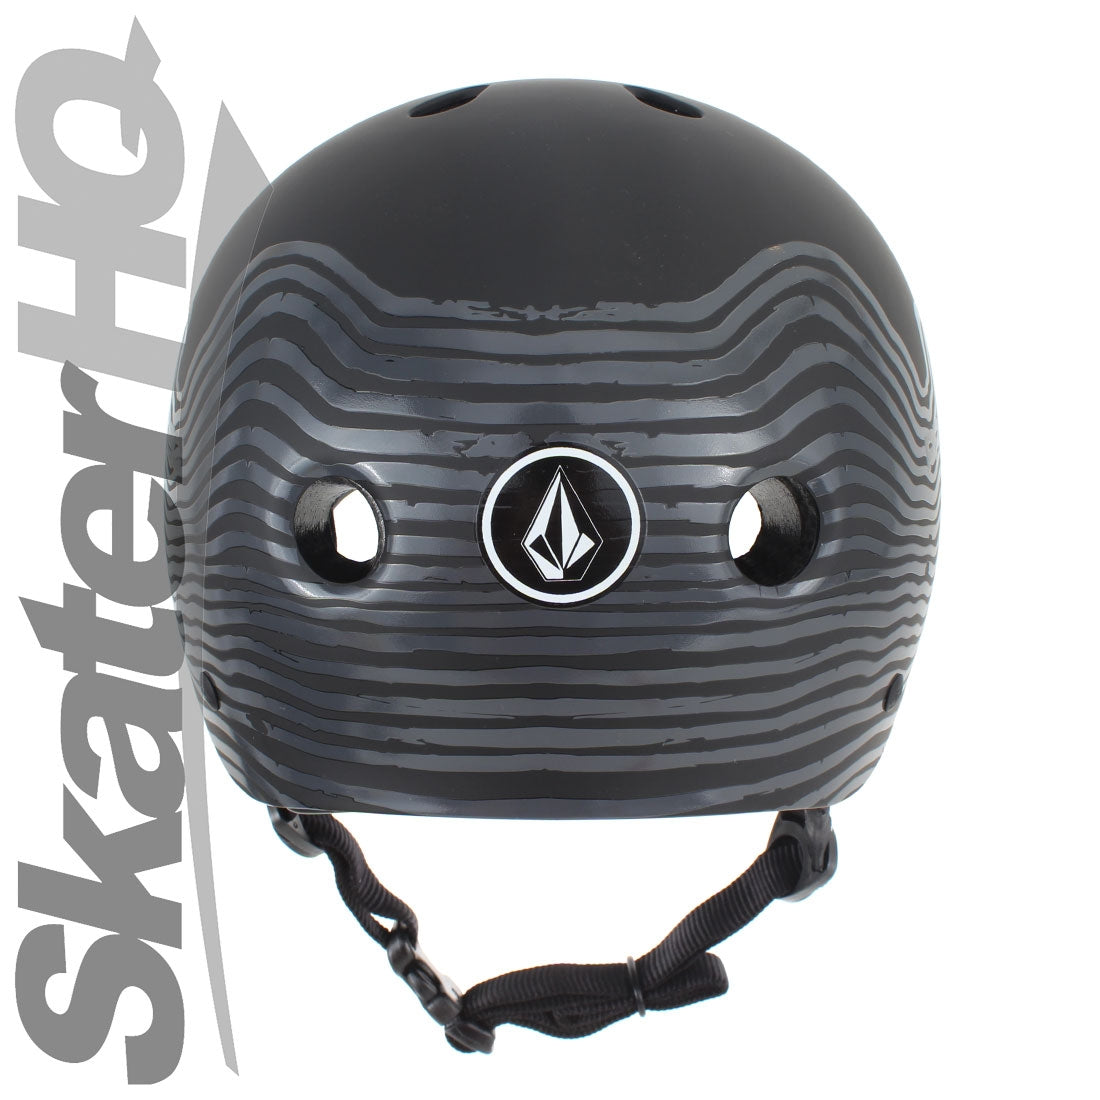 Pro-Tec Volcom Mag Vibes Certified - Small Helmets